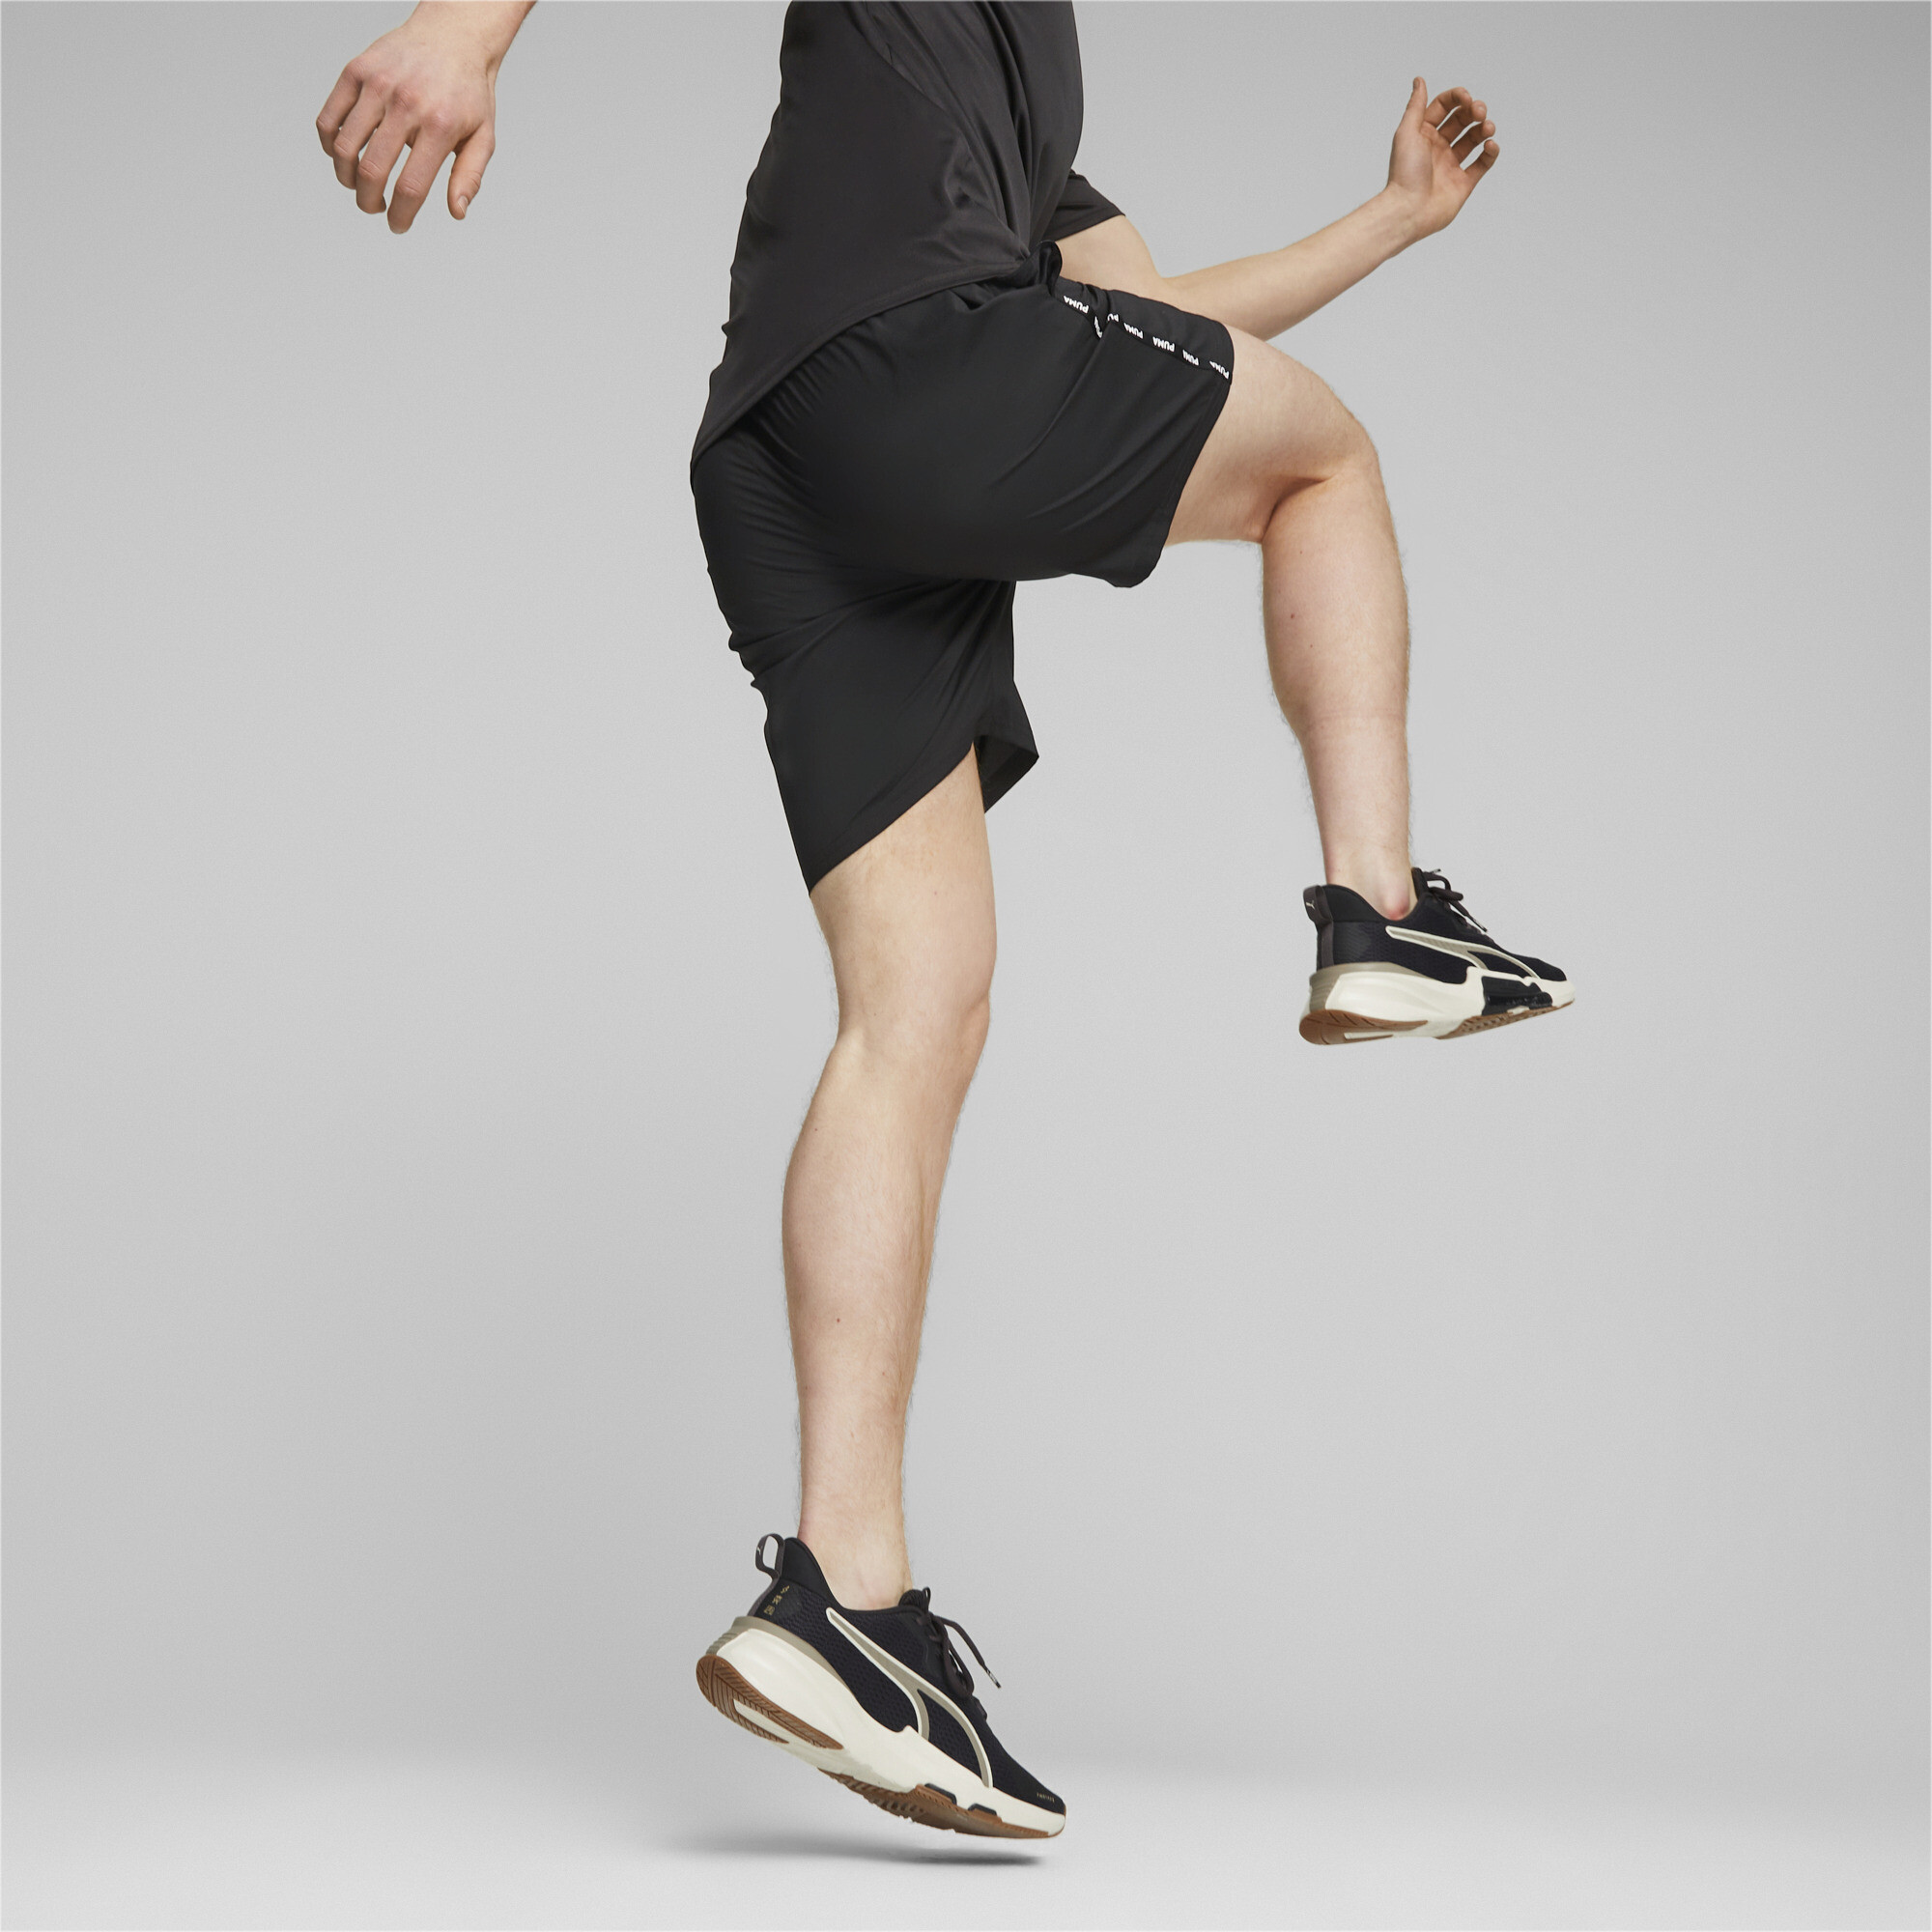 Men's PUMA Fit 7 Training Shorts In Black, Size Large